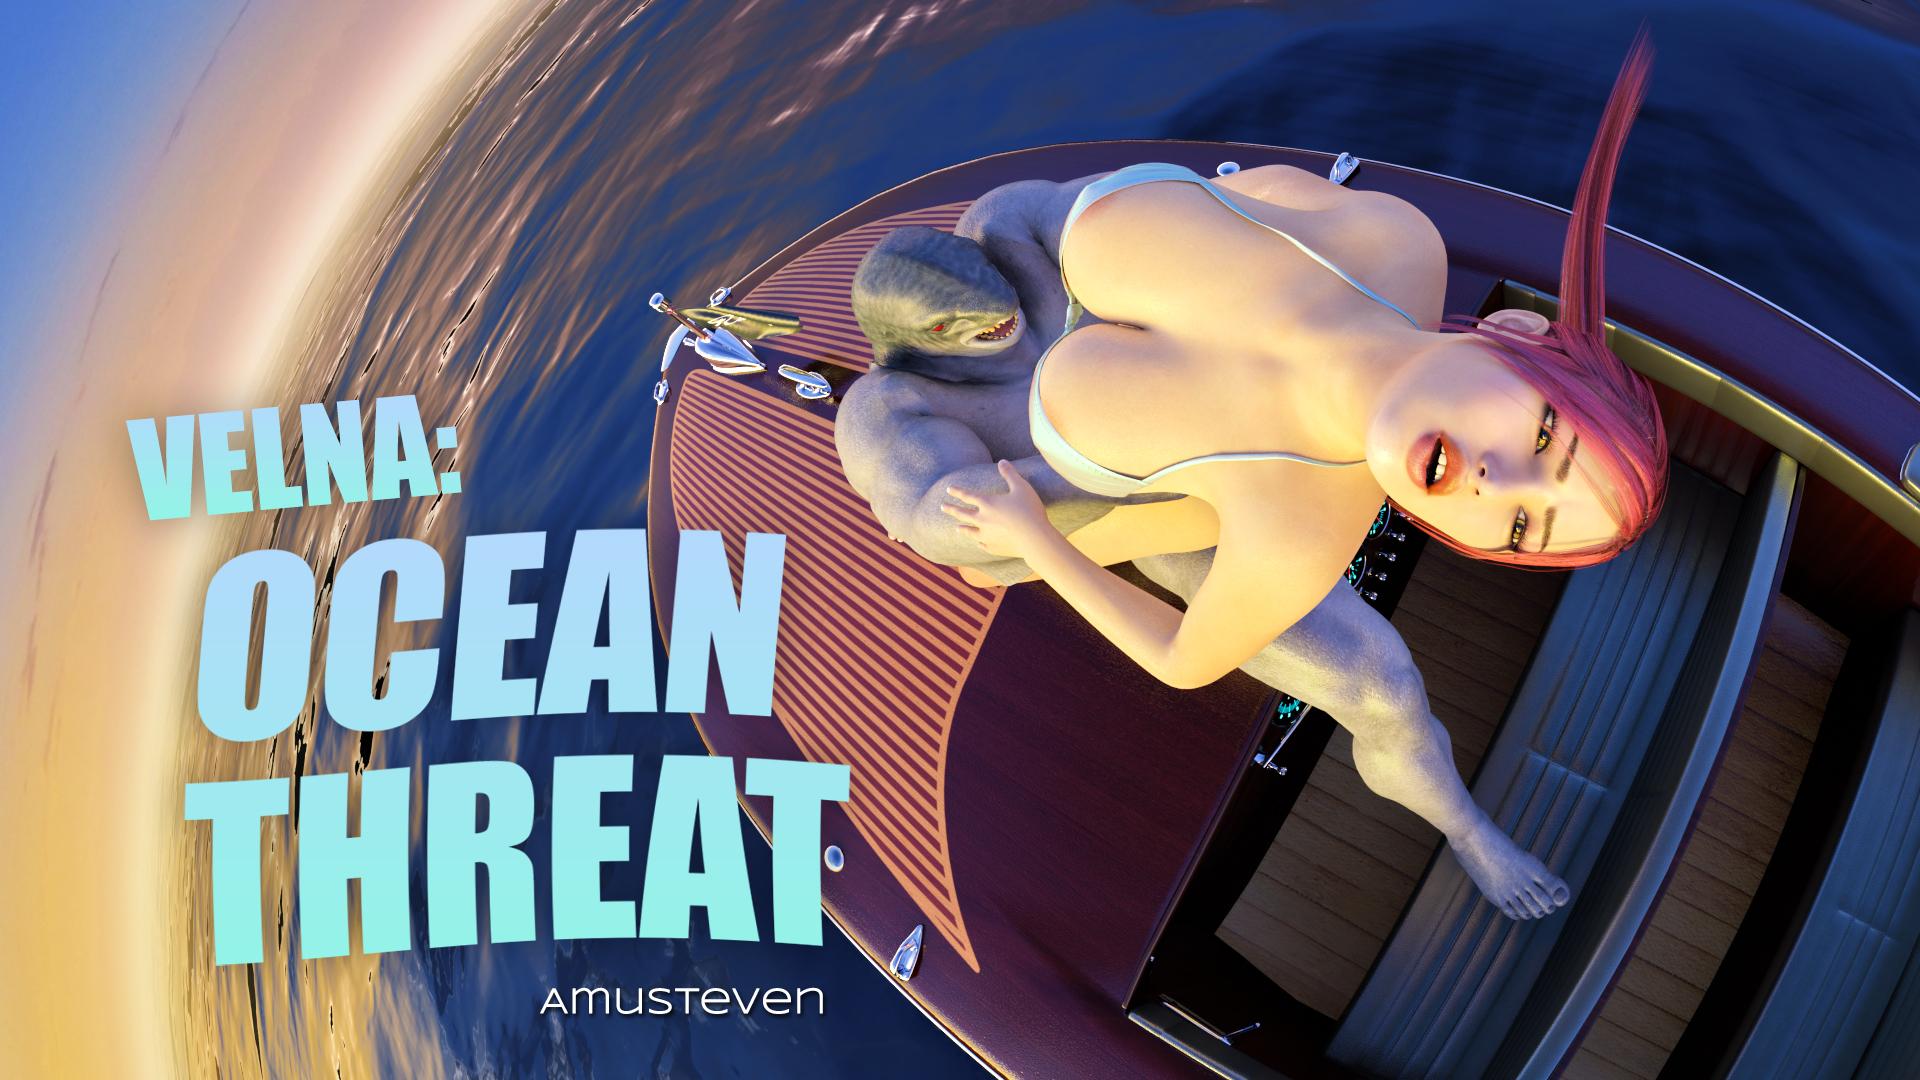 AMUSTEVEN - Velna Ocean Threat